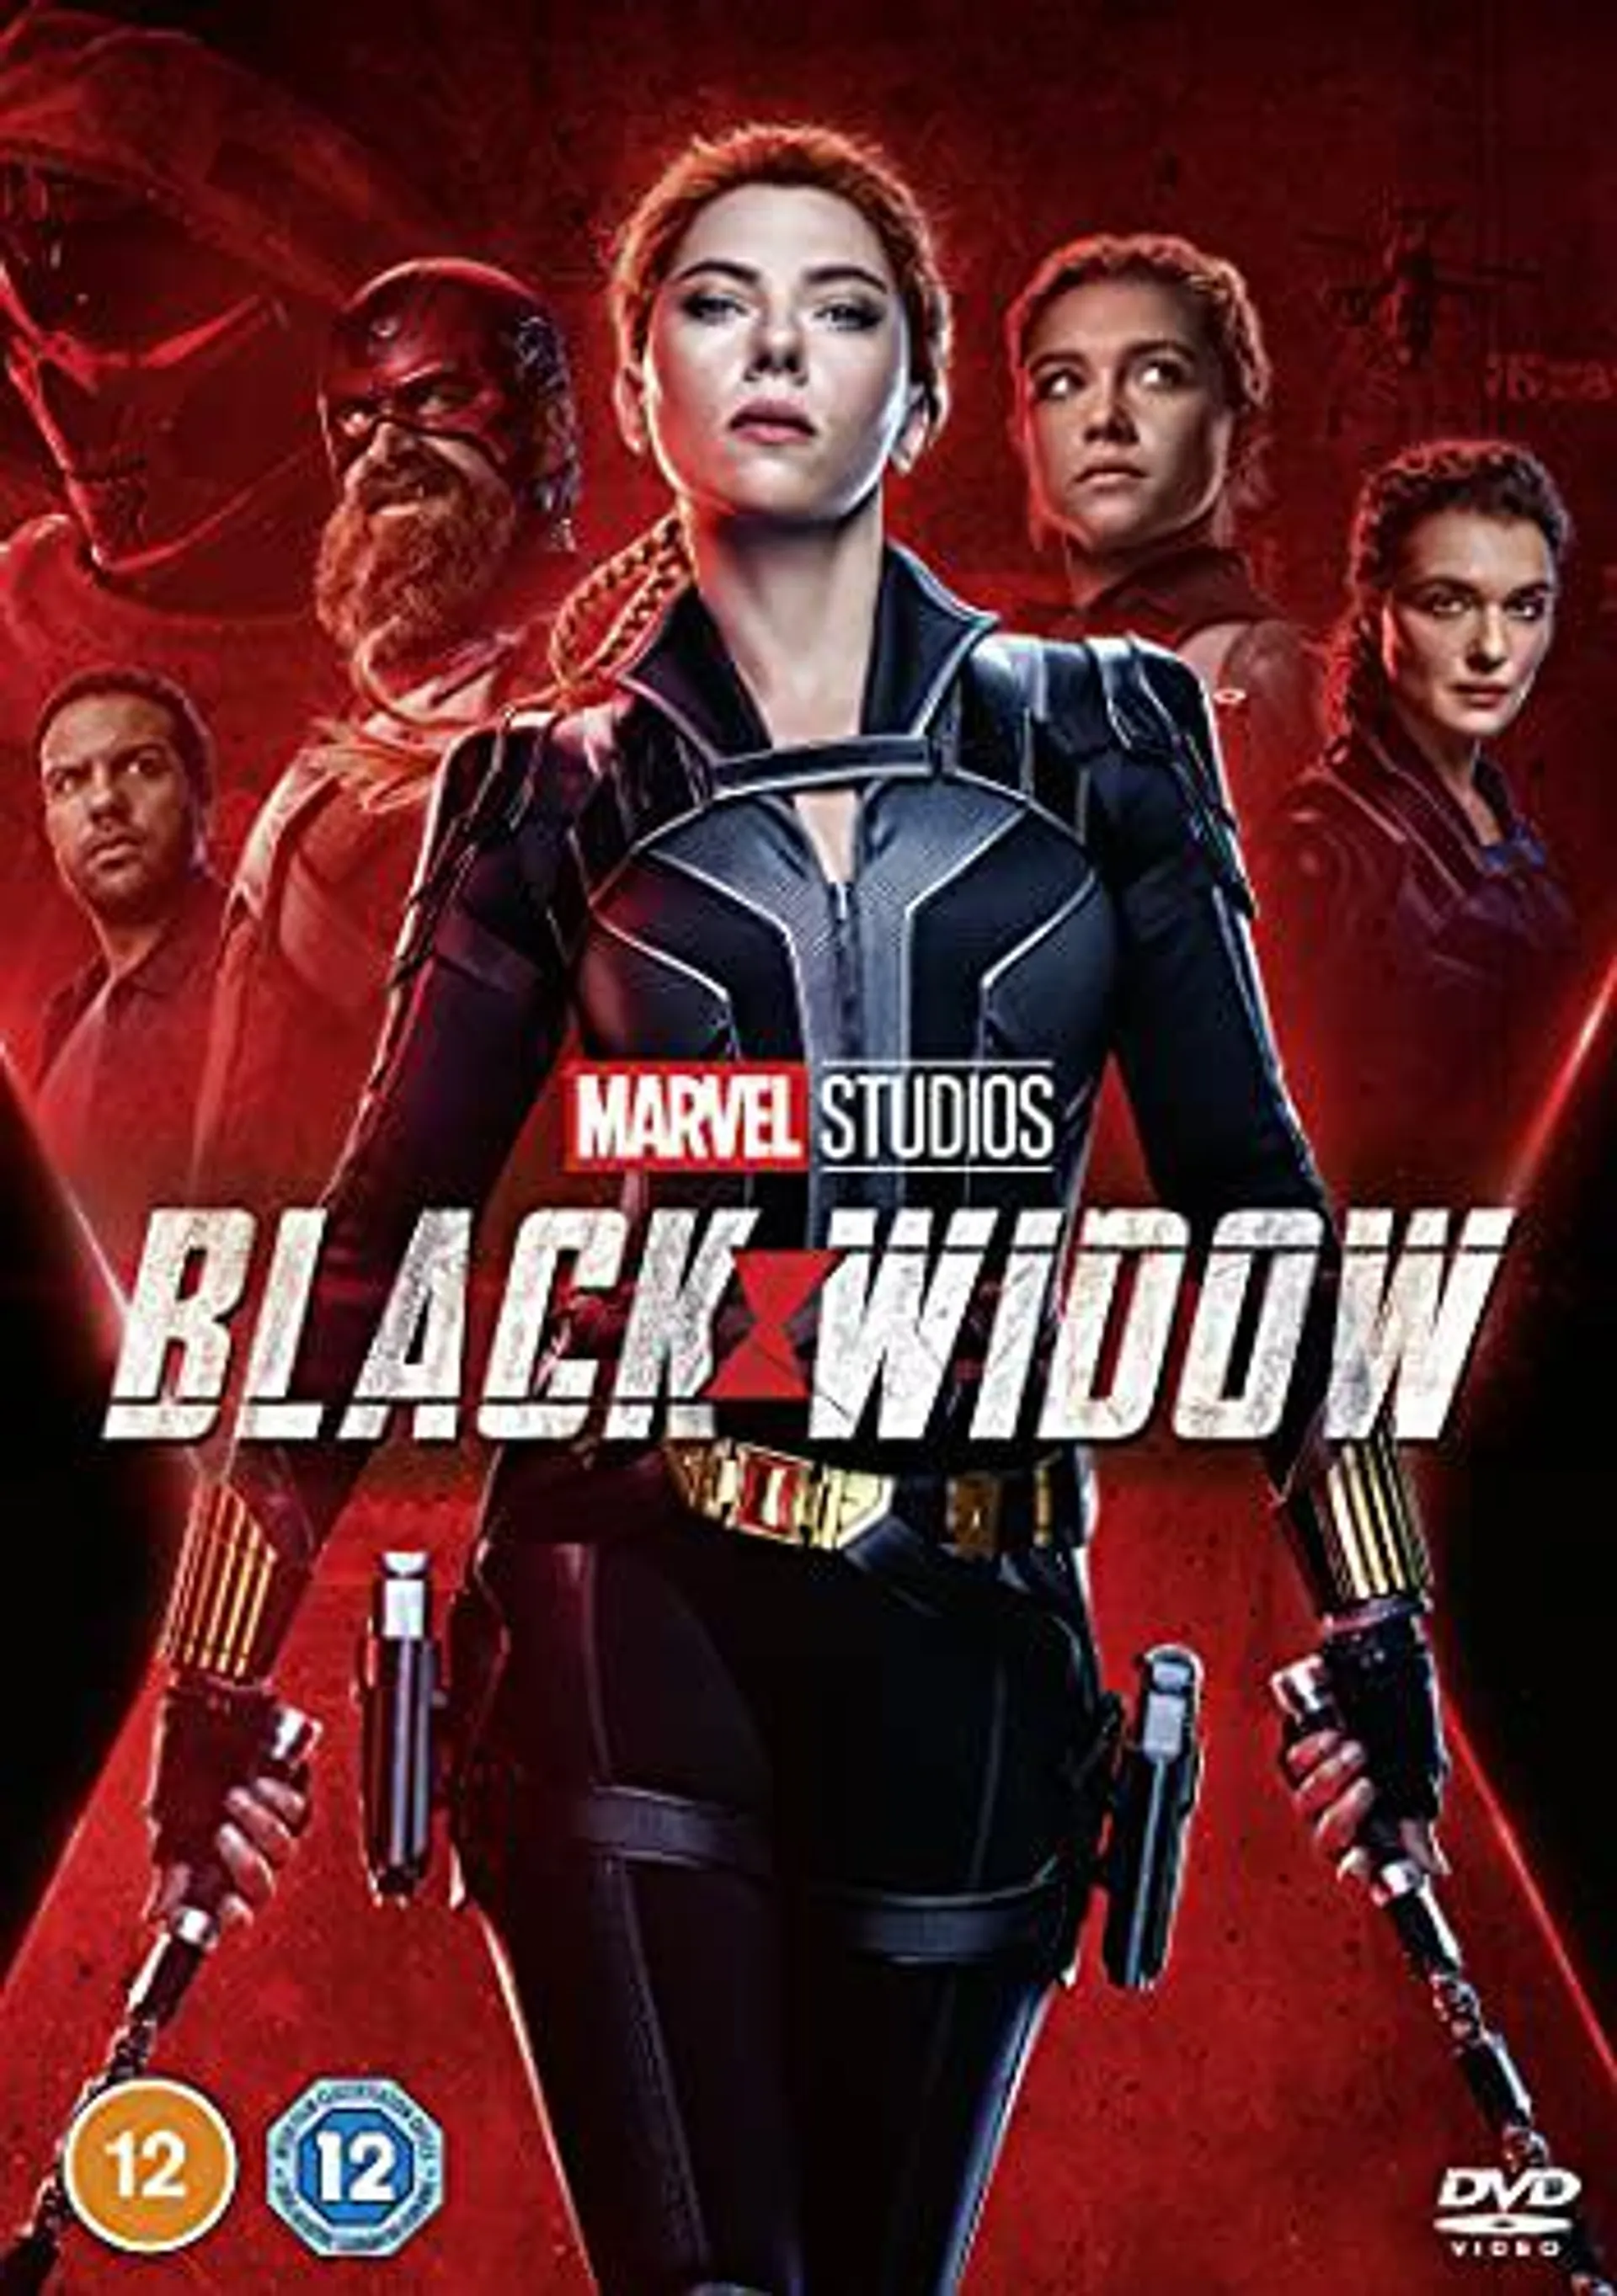 Marvel Studios Black Widow DVD